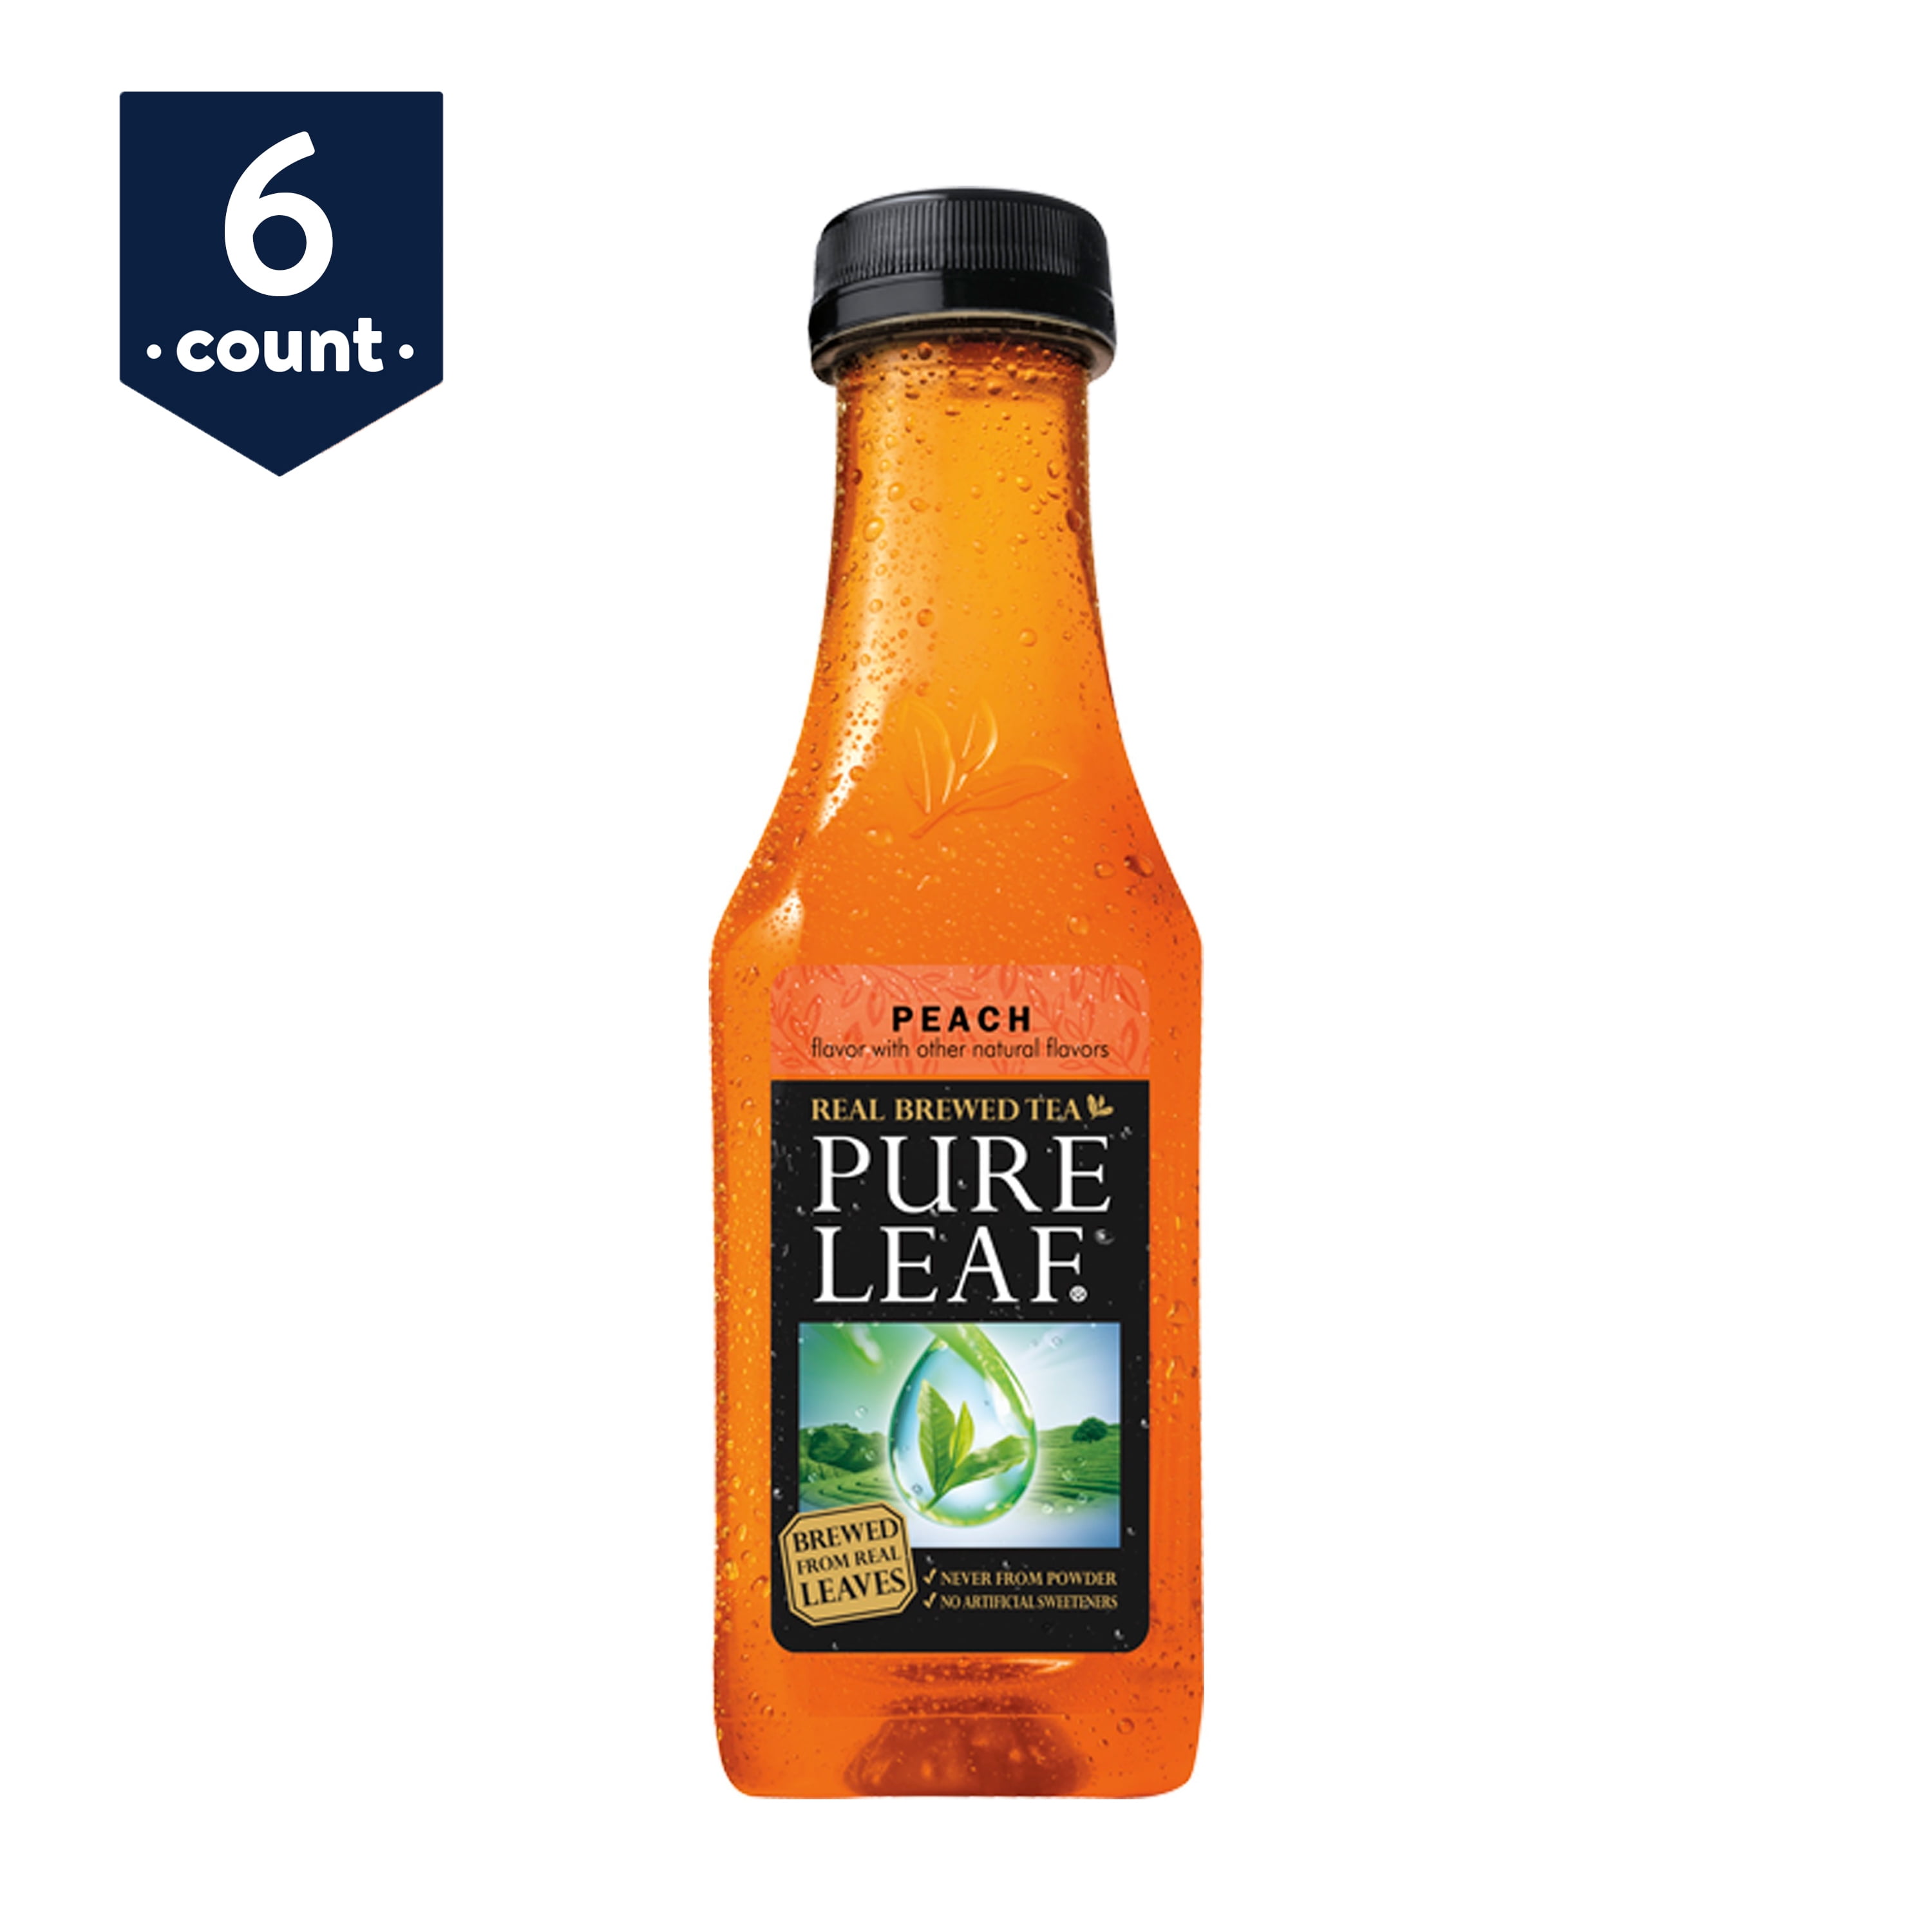 Pure Leaf Real Brewed Tea PEach Flavor, 18.5 Fl. oz., 6 Count